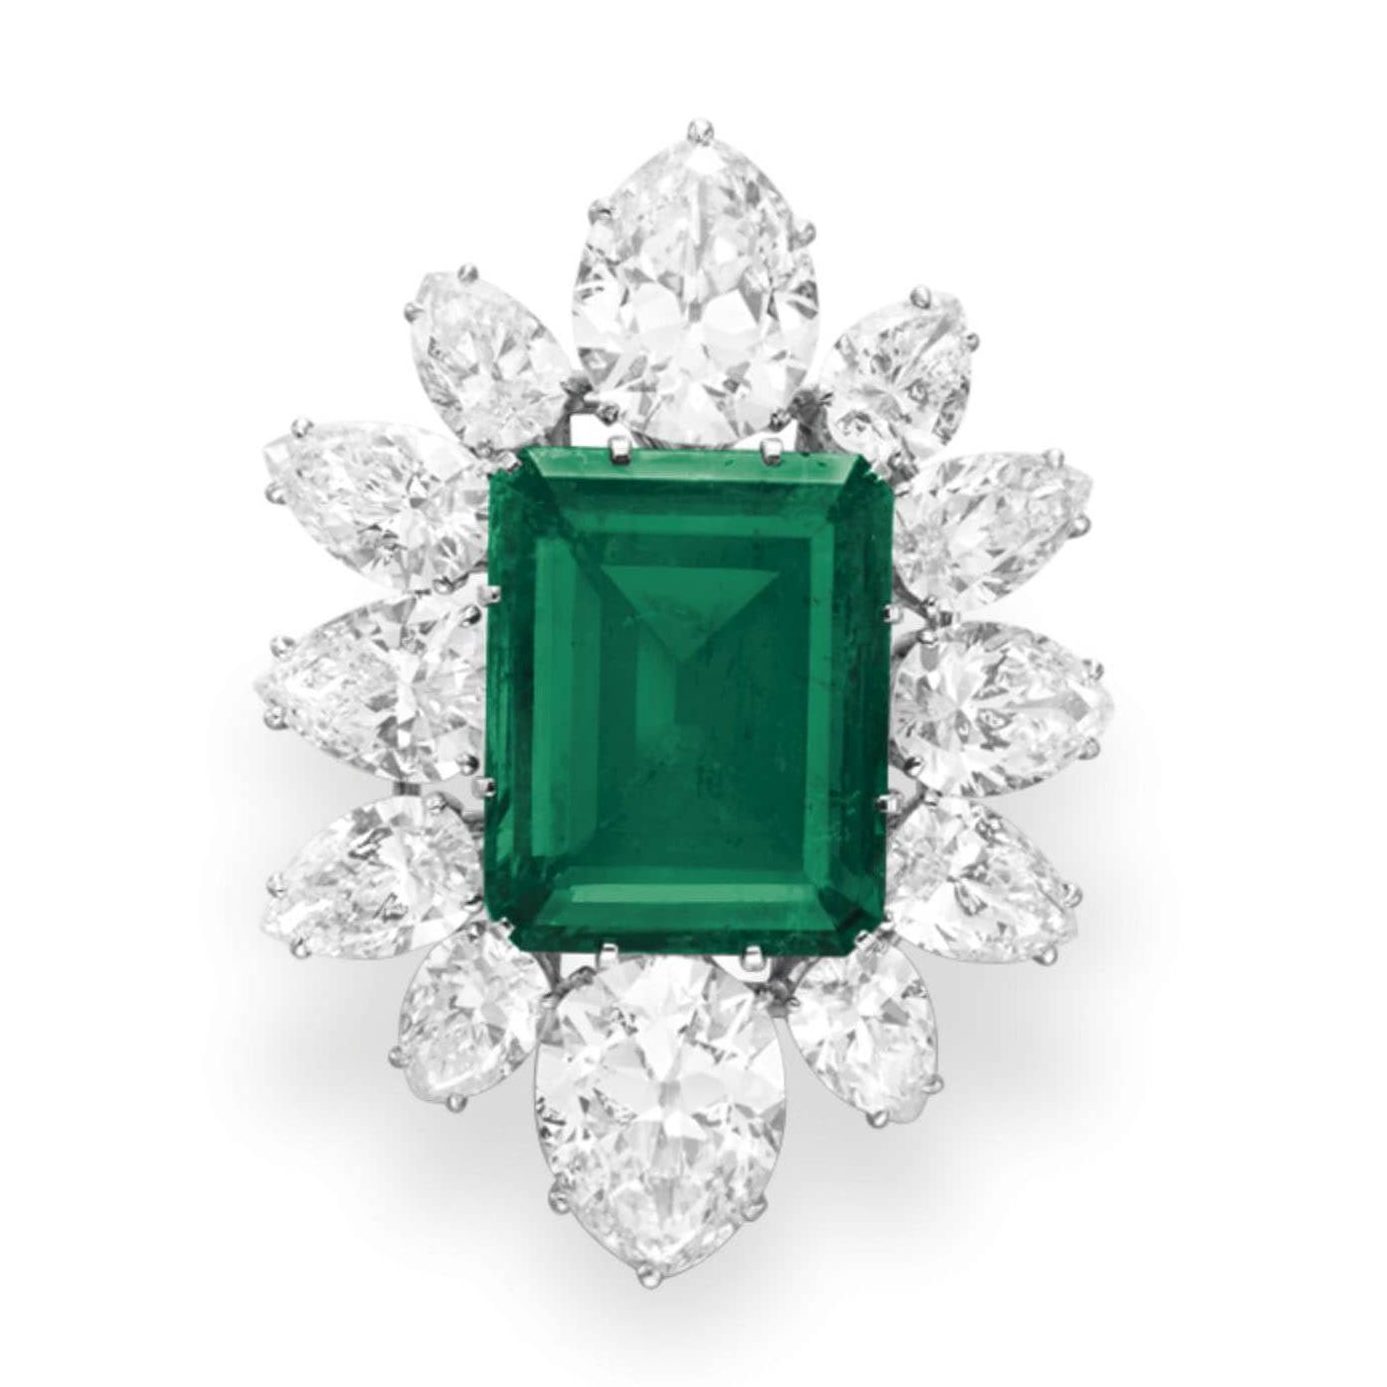 Elizabeth Taylor’s Bulgari Emeralds